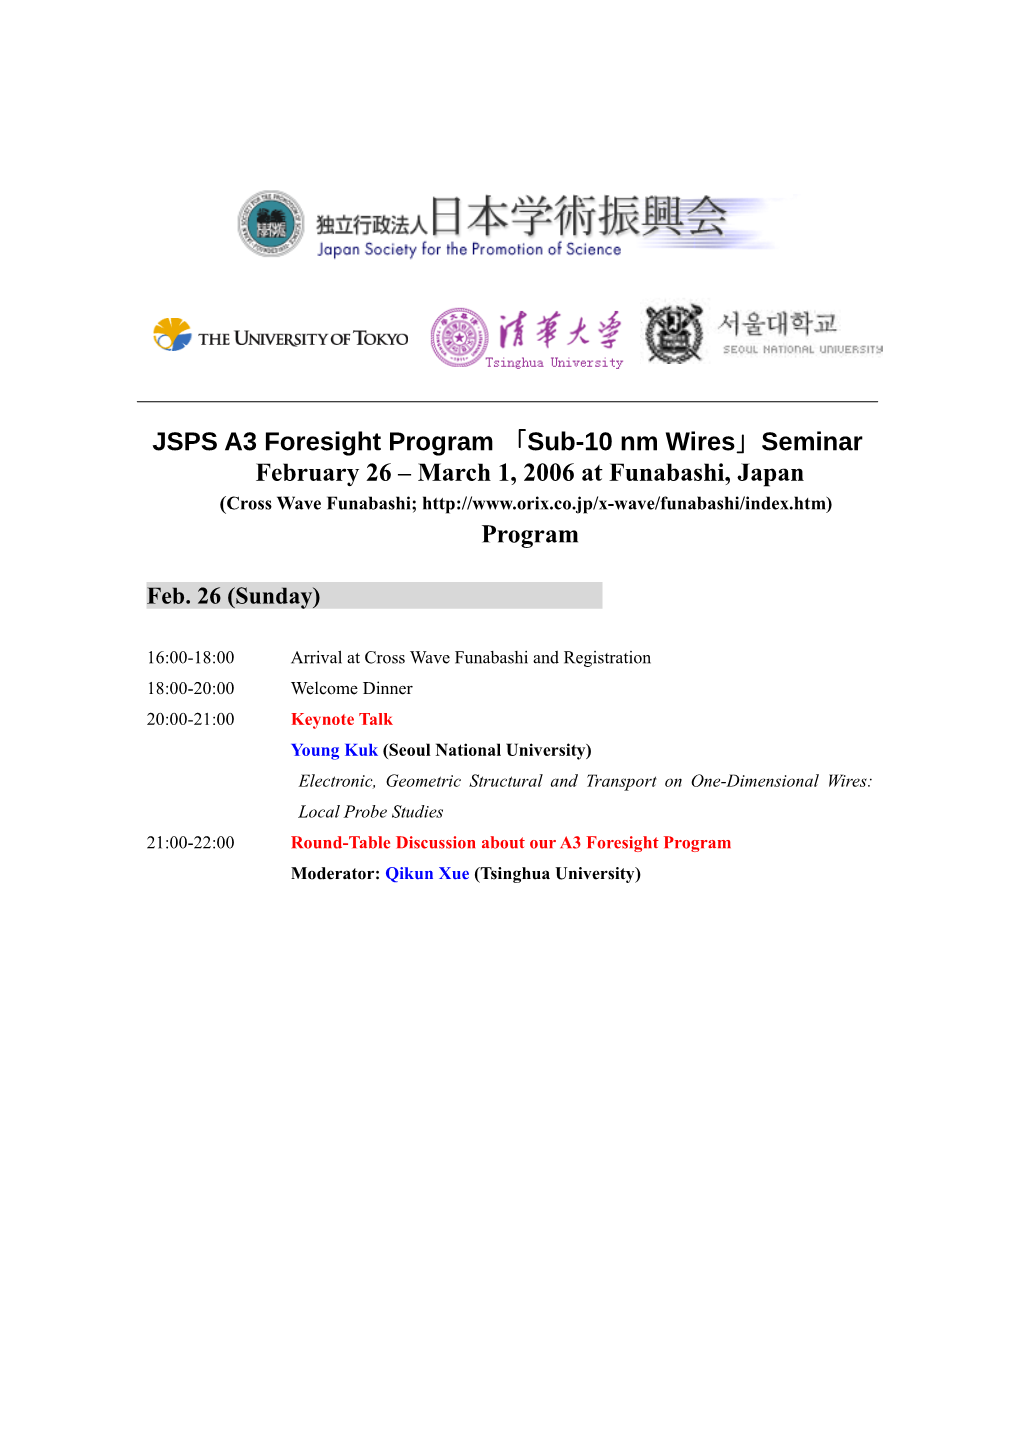 JSPS A3 Foresight Program Sub-10 Nm Wires Seminar